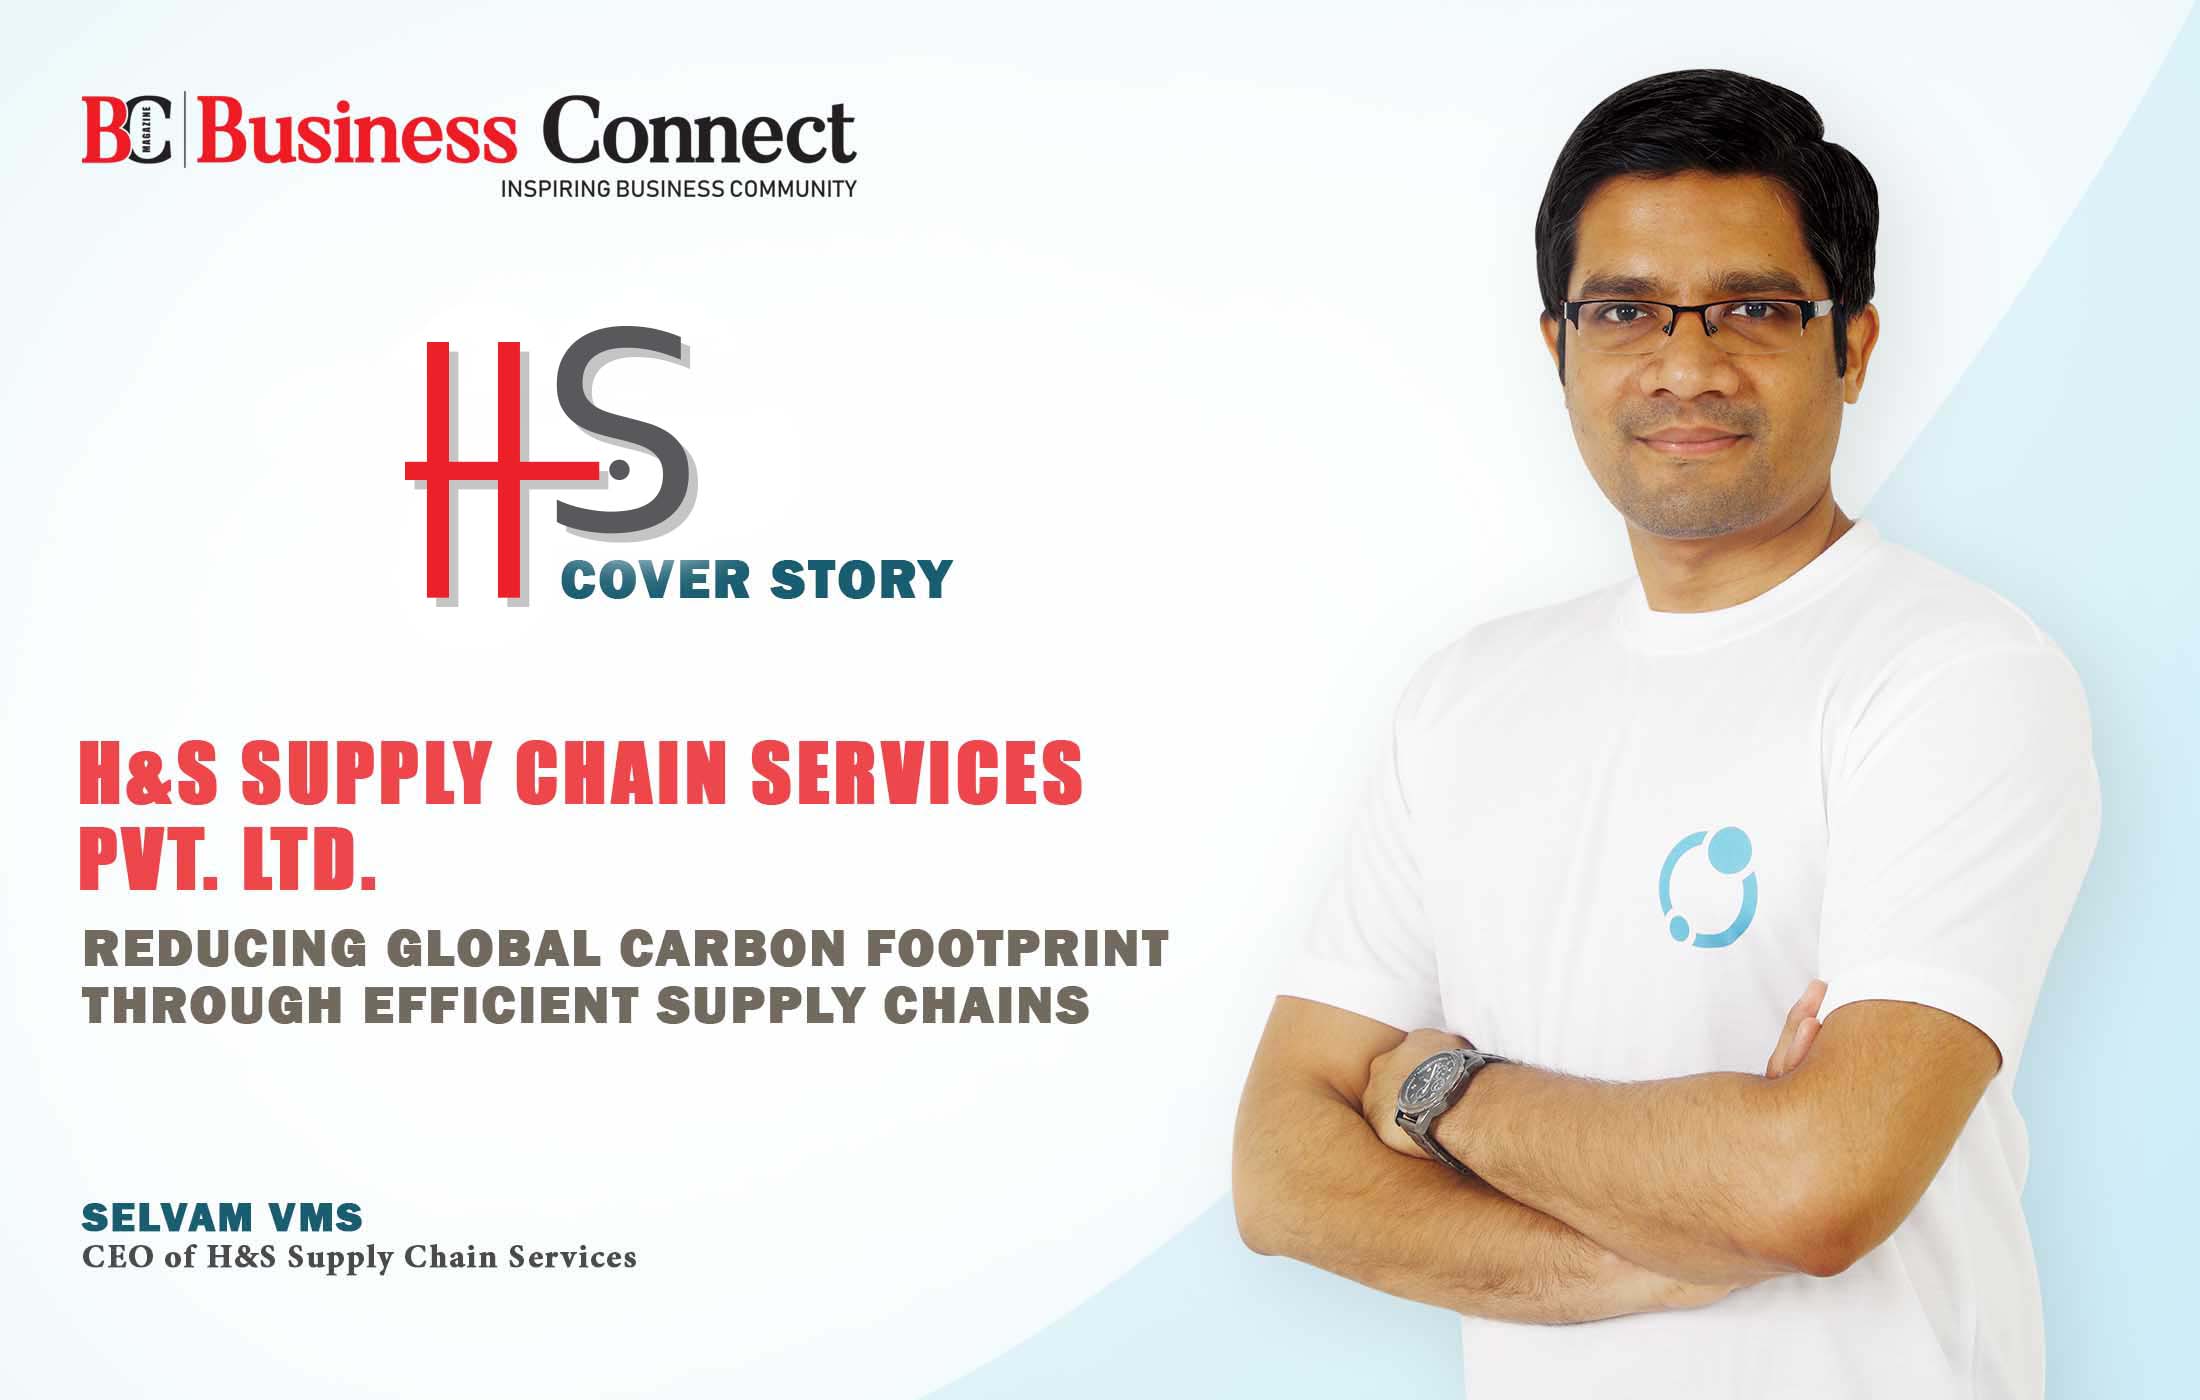 H&S SUPPLY CHAIN SERVICES PVT. LTD